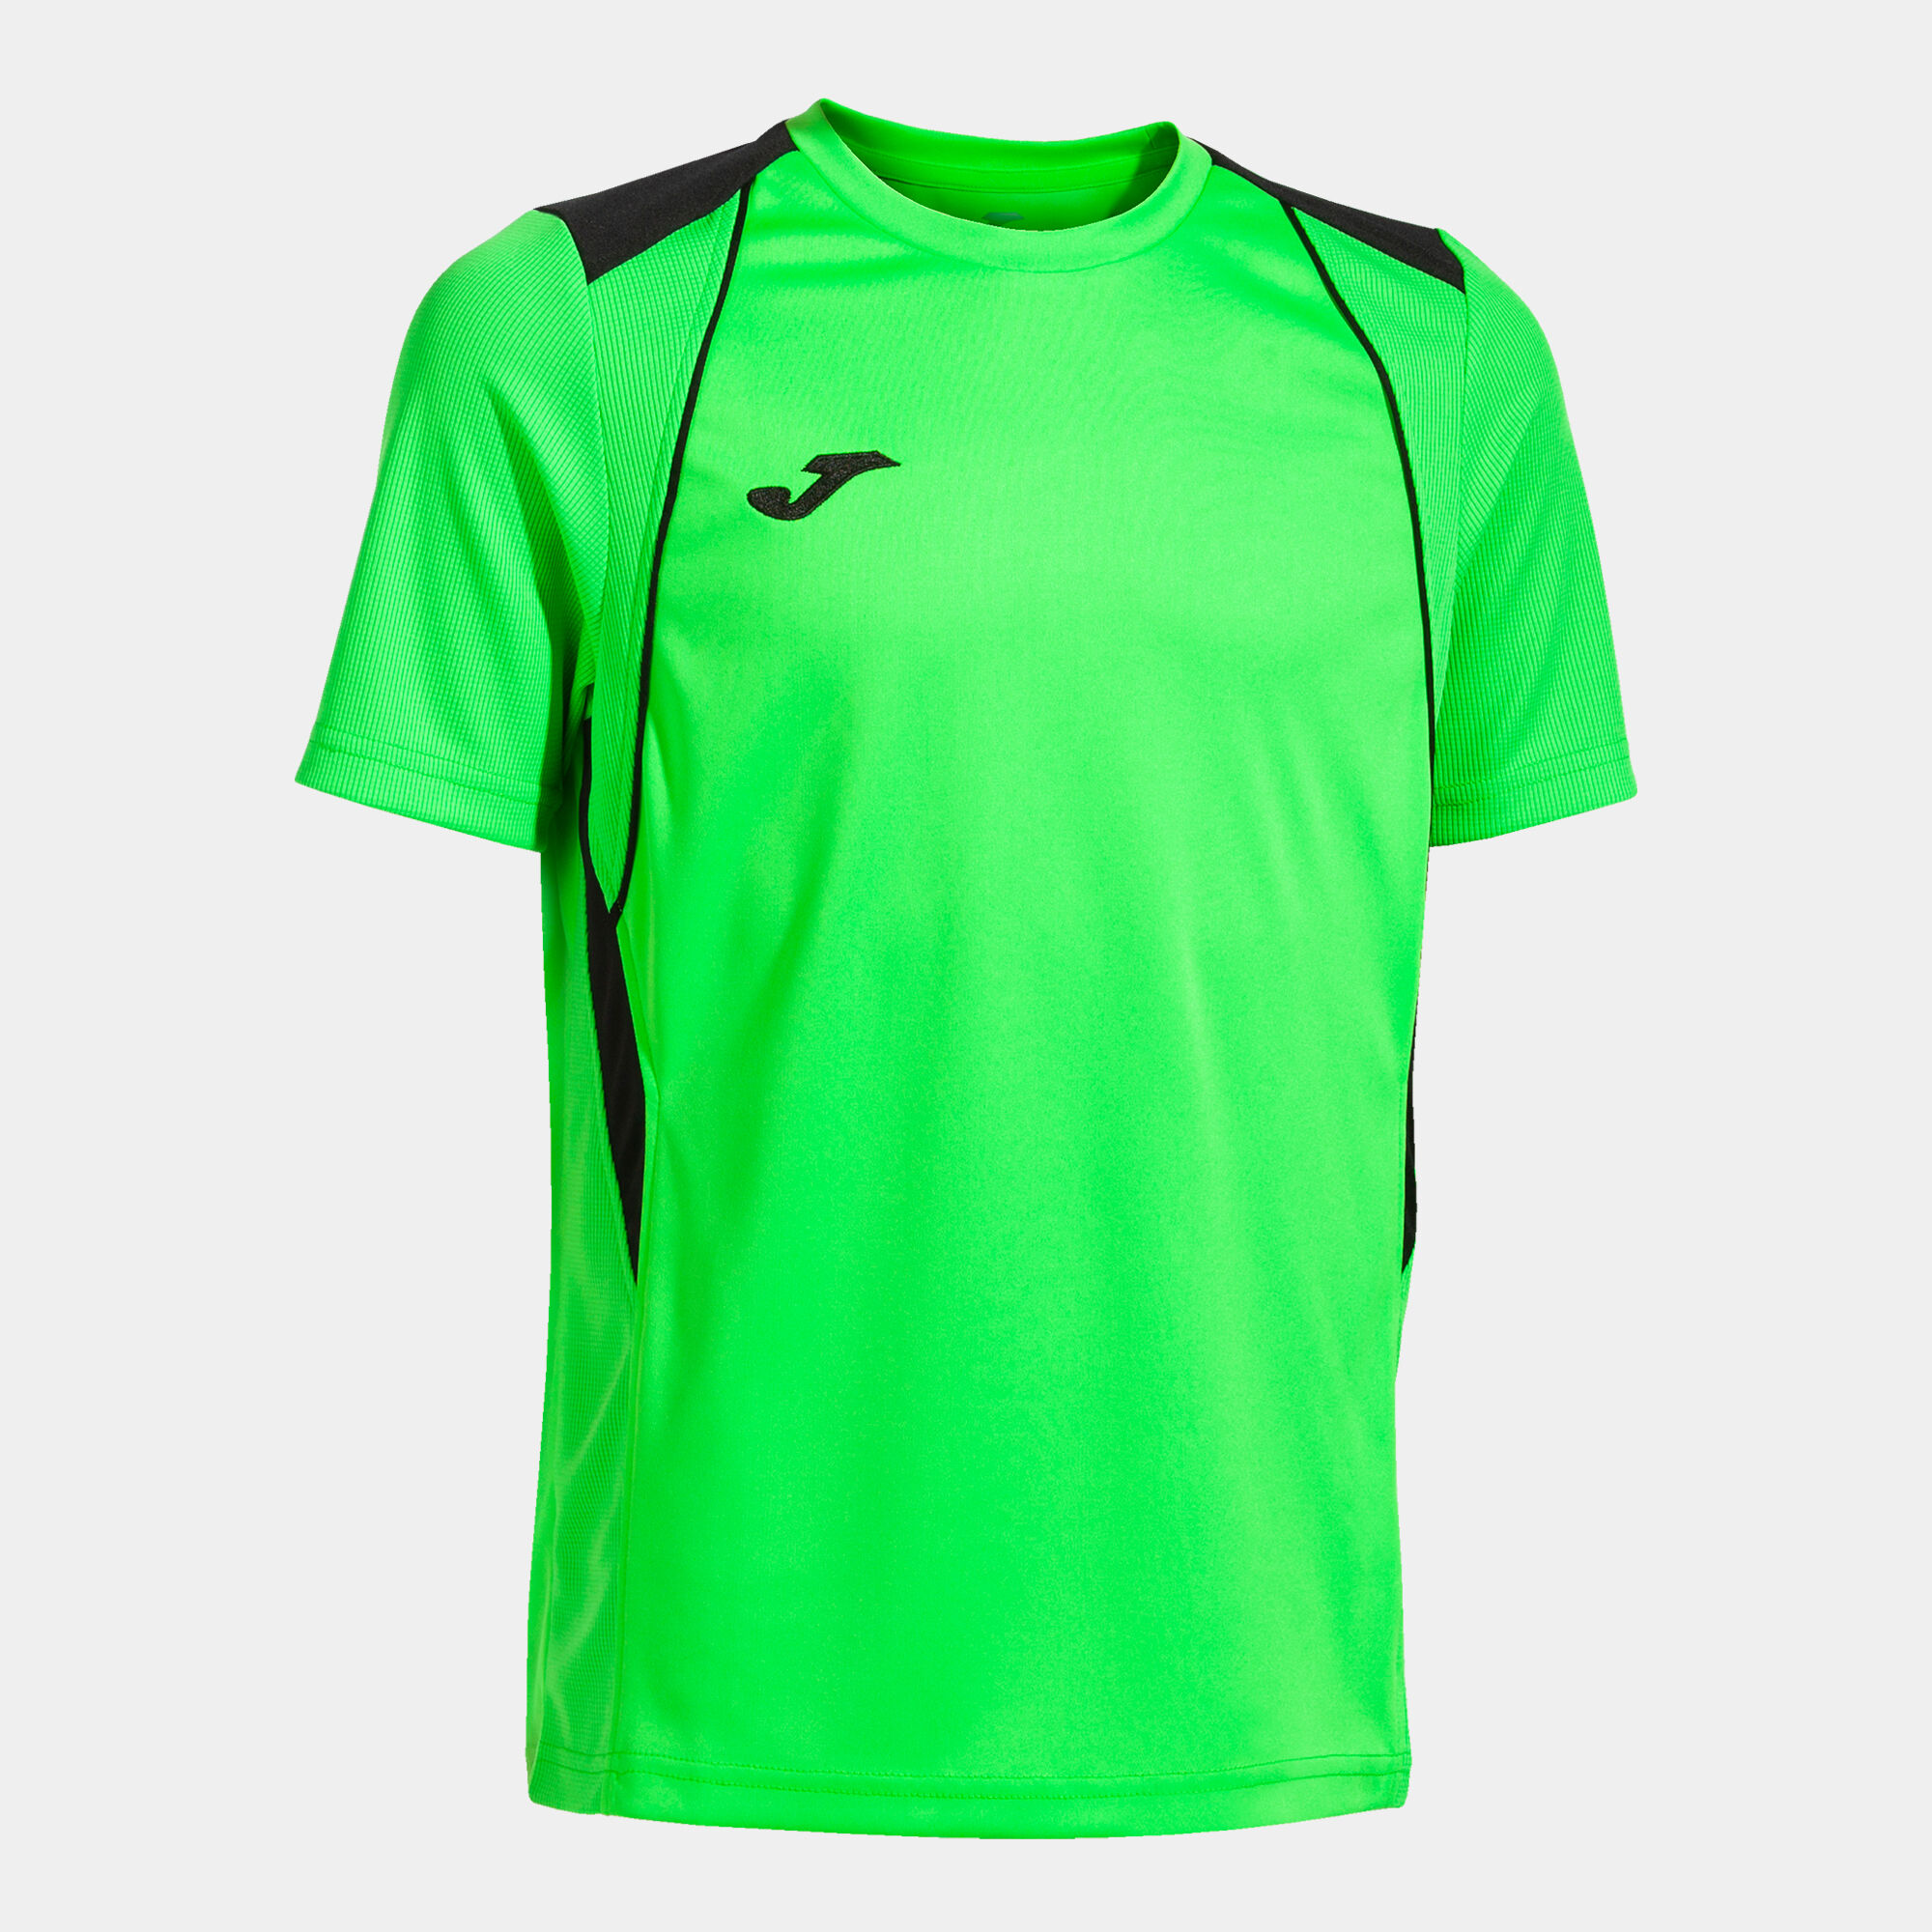 Shirt short sleeve man Championship VII fluorescent green black